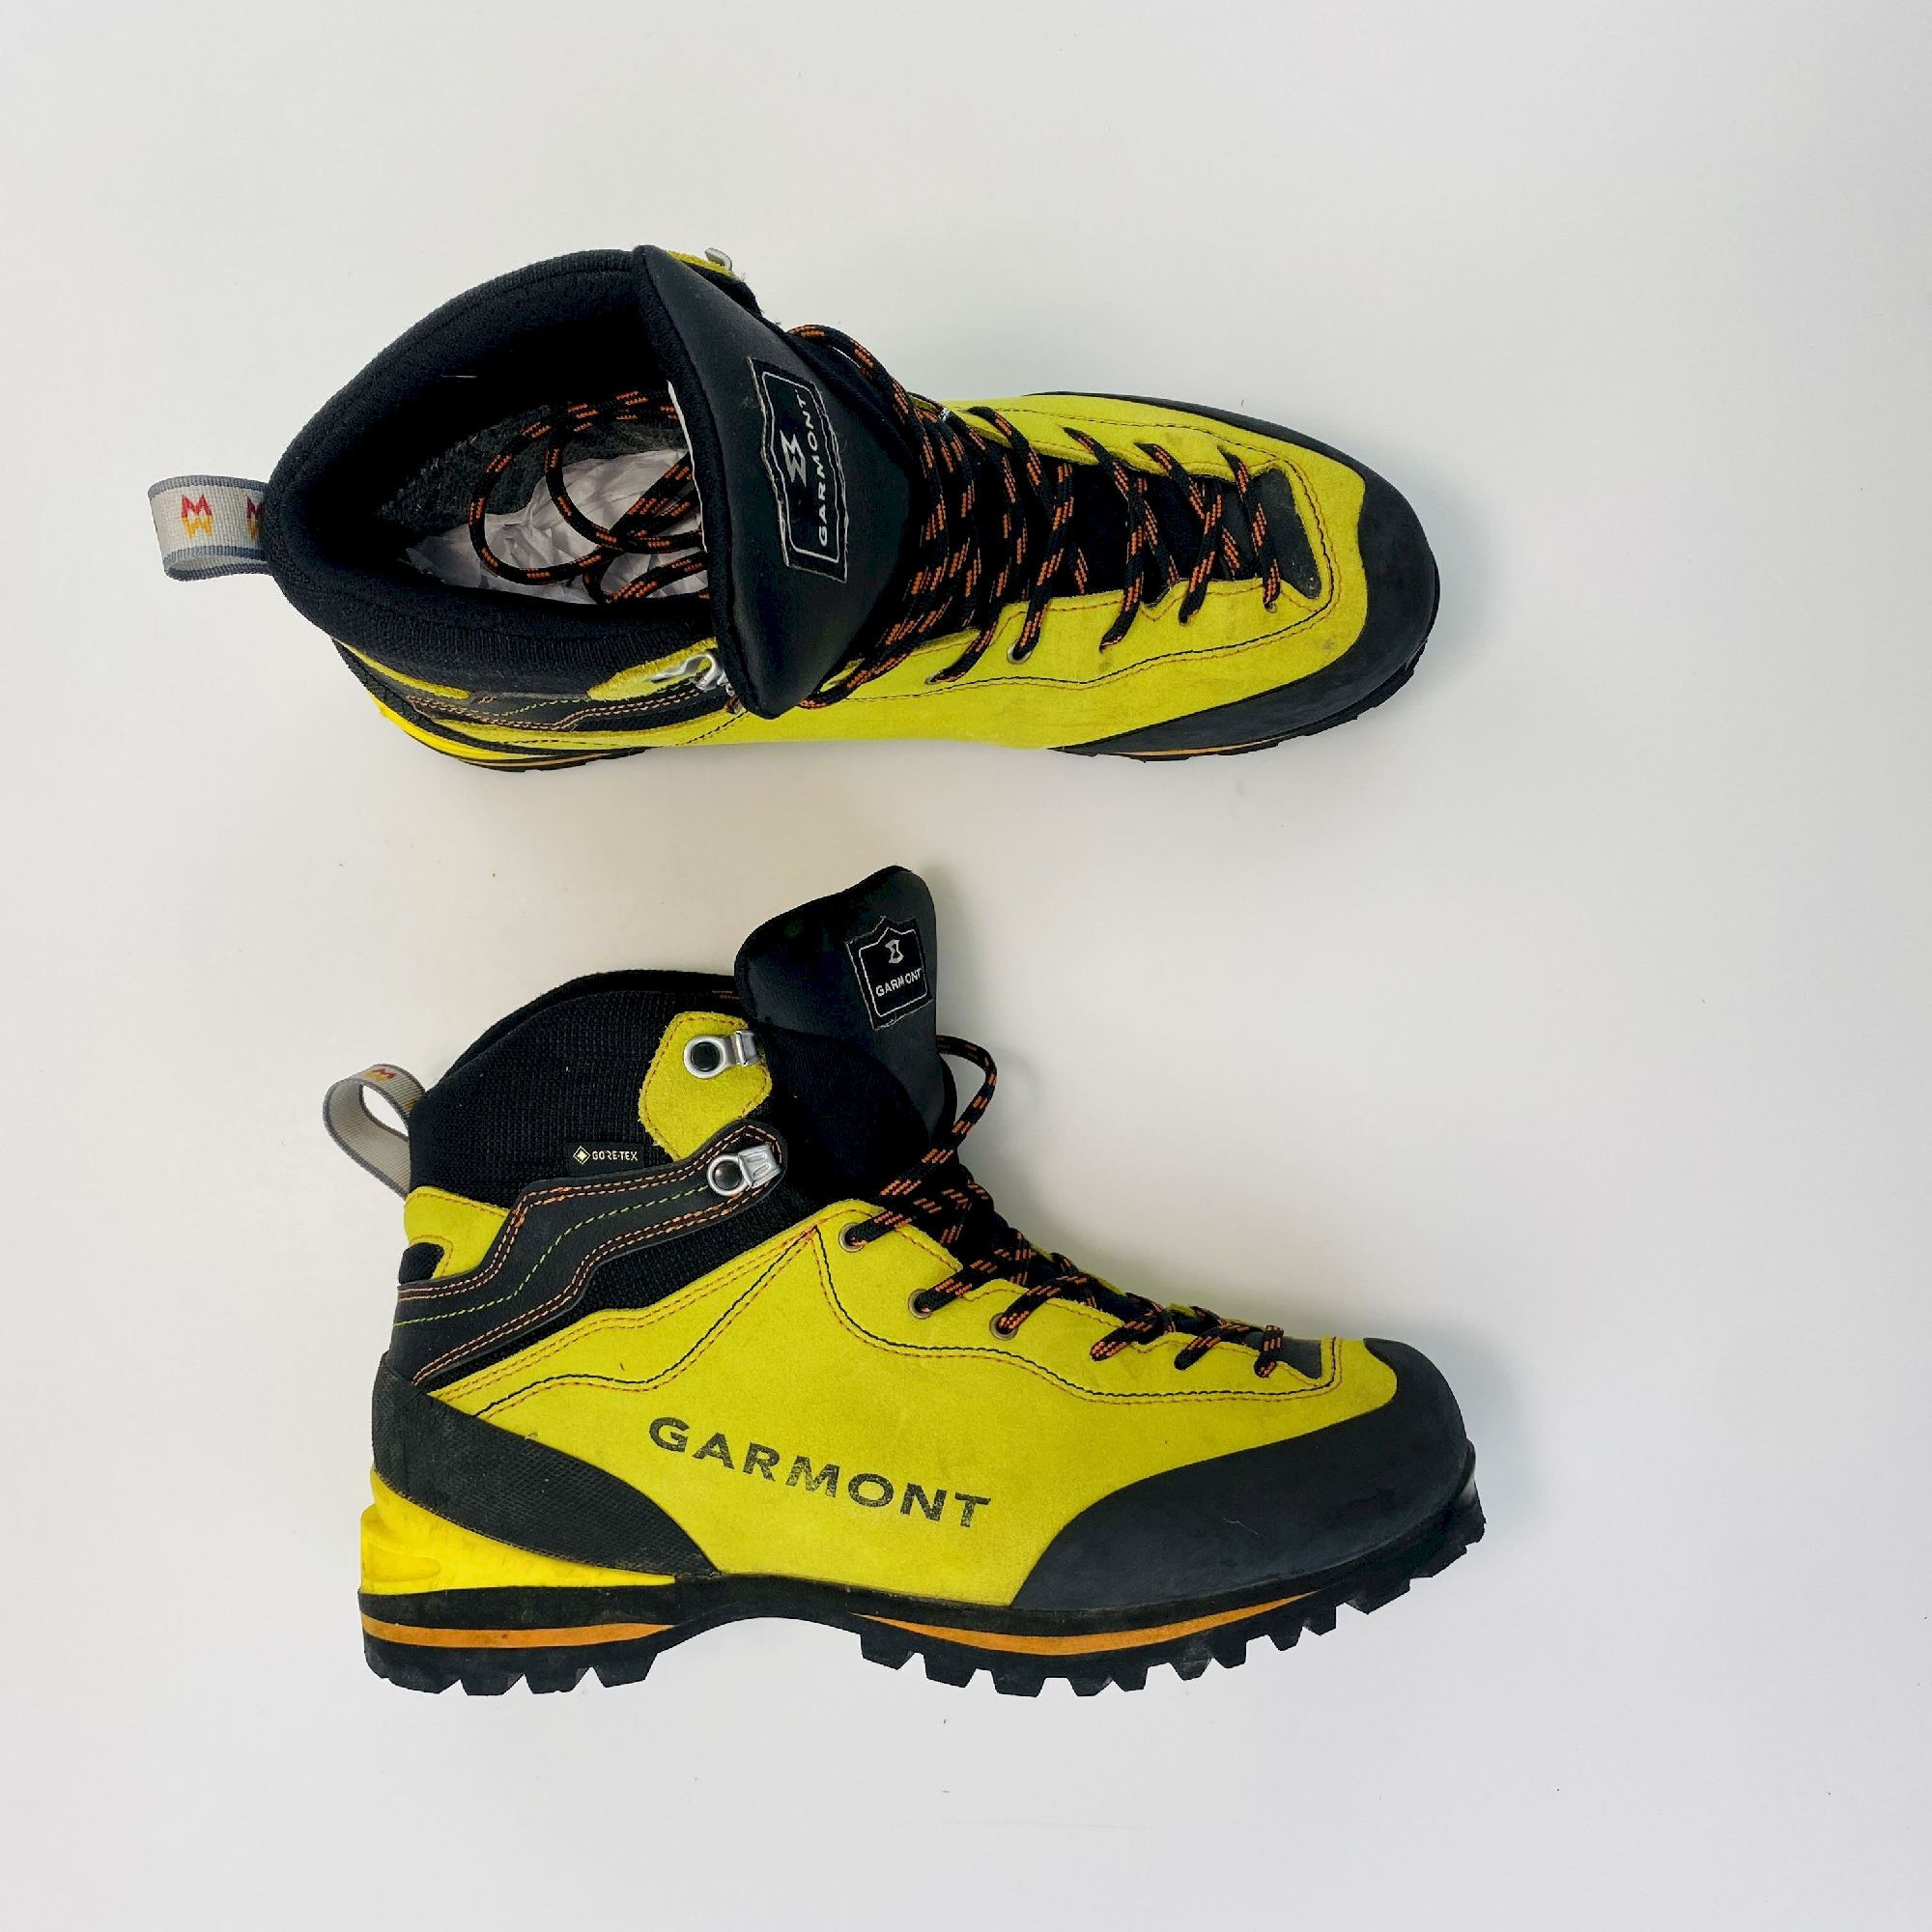 Garmont Chaussure d'alpinisme GTX - Seconde main Chaussures alpinisme homme - Jaune - 42.5 | Hardloop